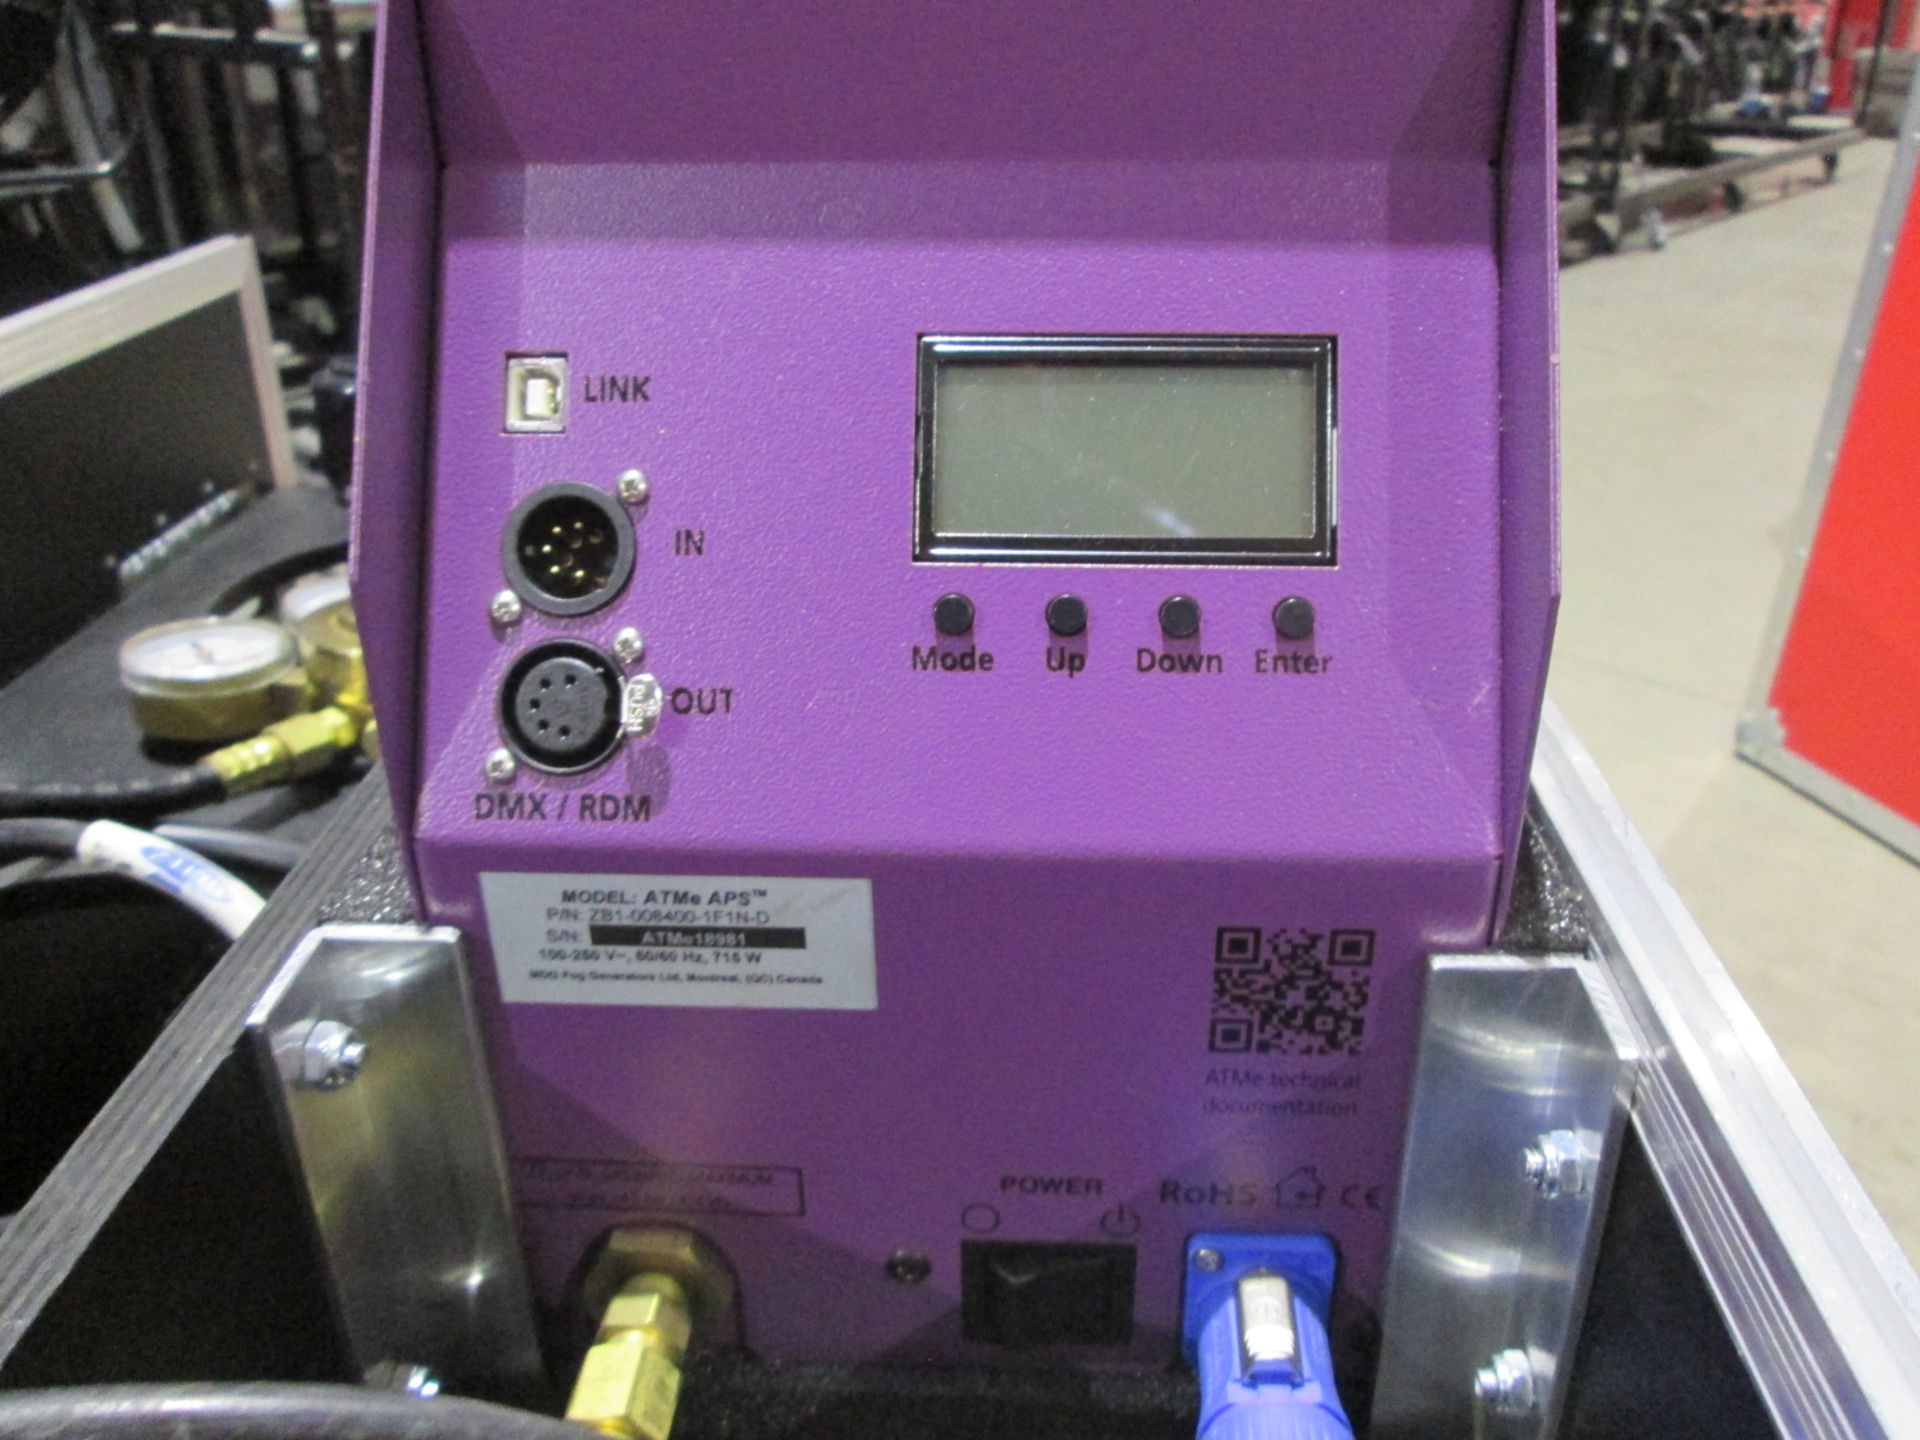 MDG ATMe APS Haze Generator. In flight case. S/N ATMe18981 - Image 4 of 11